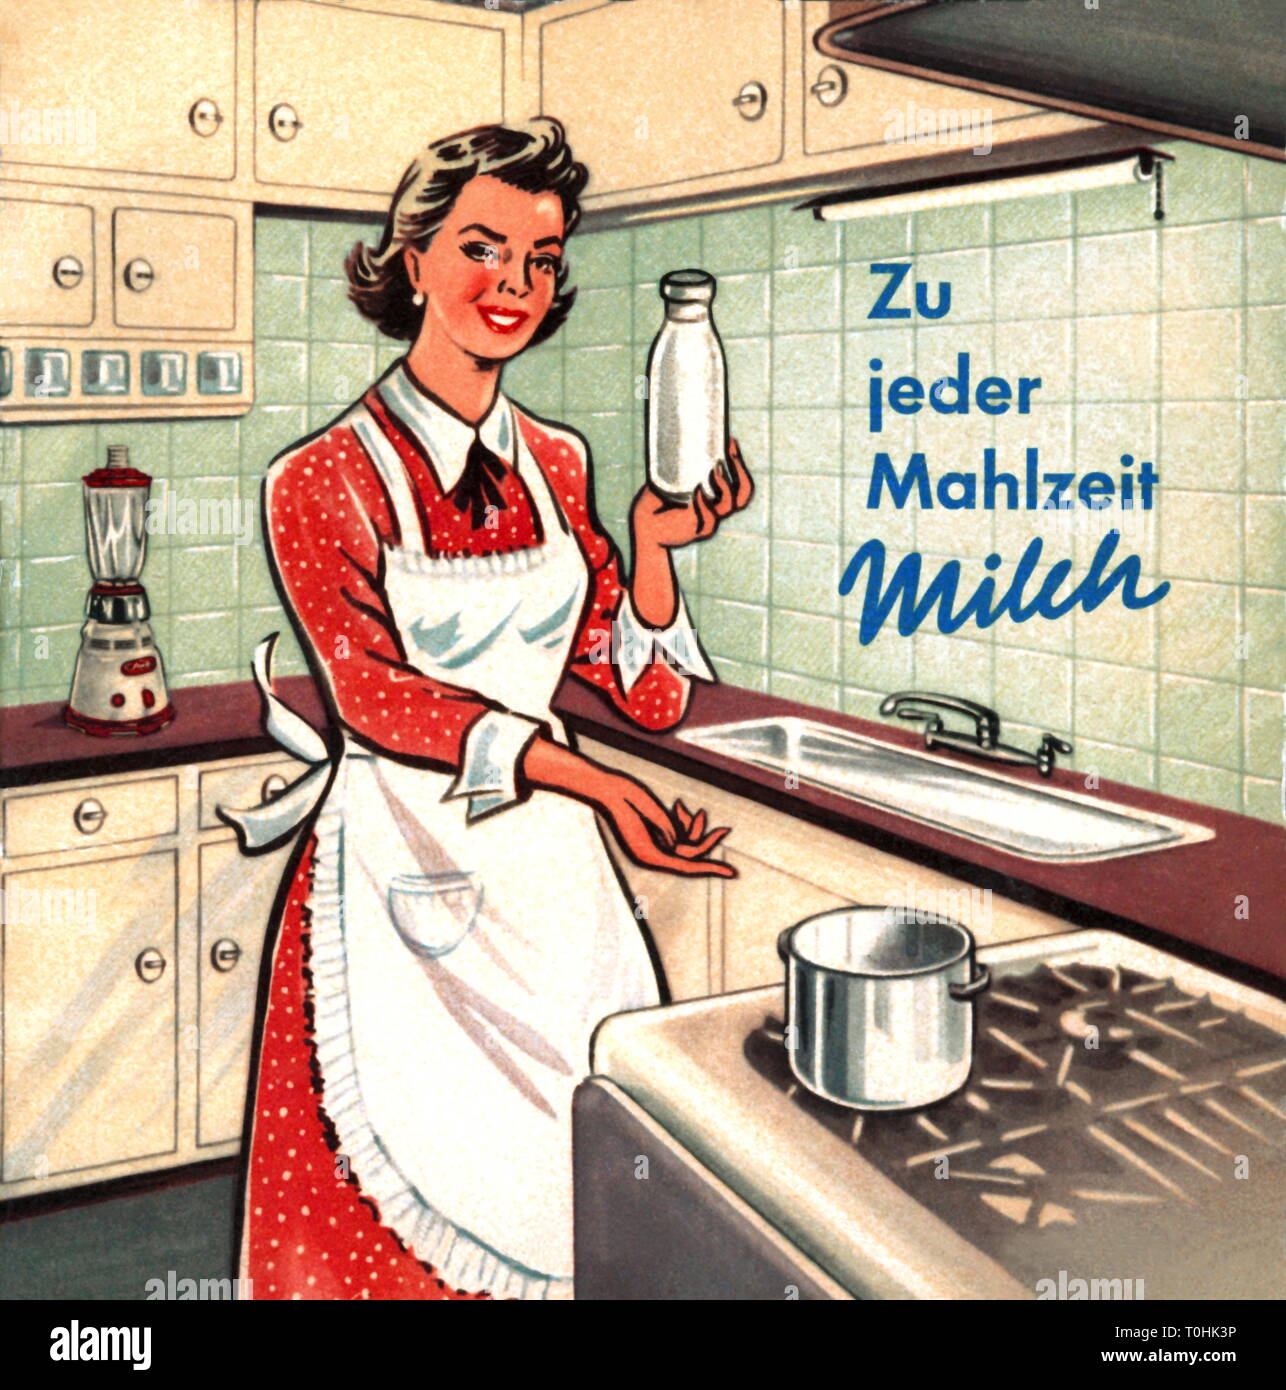 Domestico, cucina, casalinga in stufa, slogan: 'Zu jeder Mahlzeit Milch' (latte per ogni pasto), Germania, 1954 circa, Additional-Rights-Clearance-Info-Not-Available Foto Stock